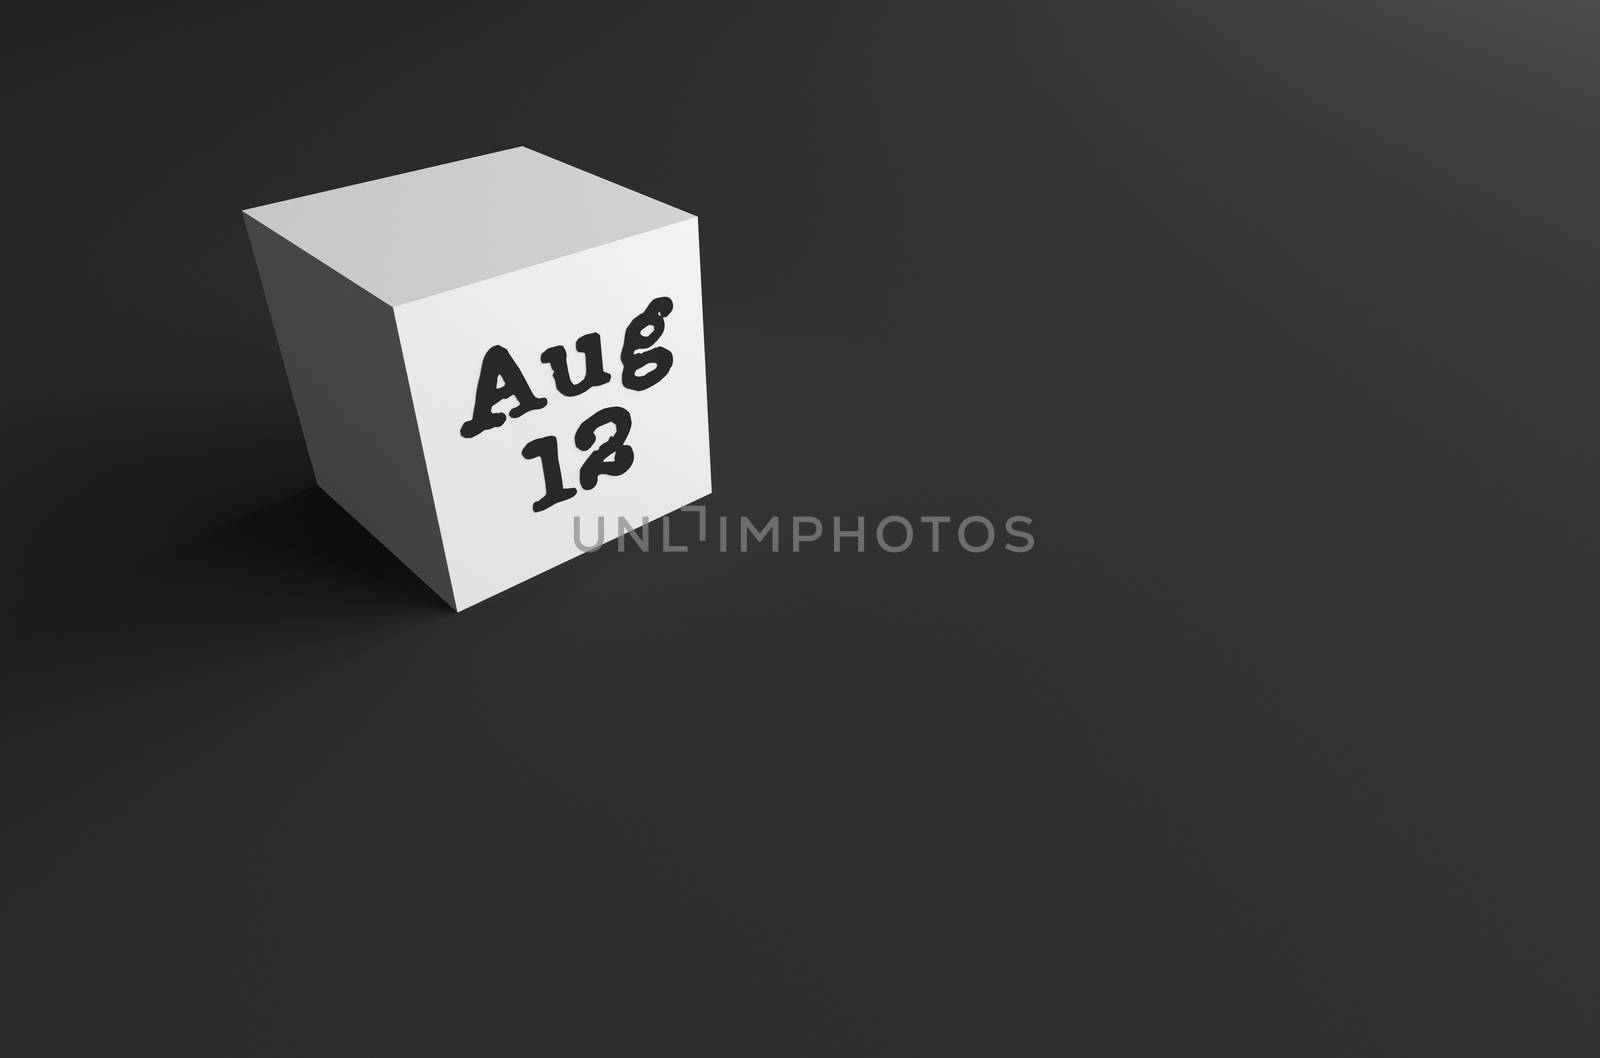 3D RENDERING OF Aug 12 by PrettyTG